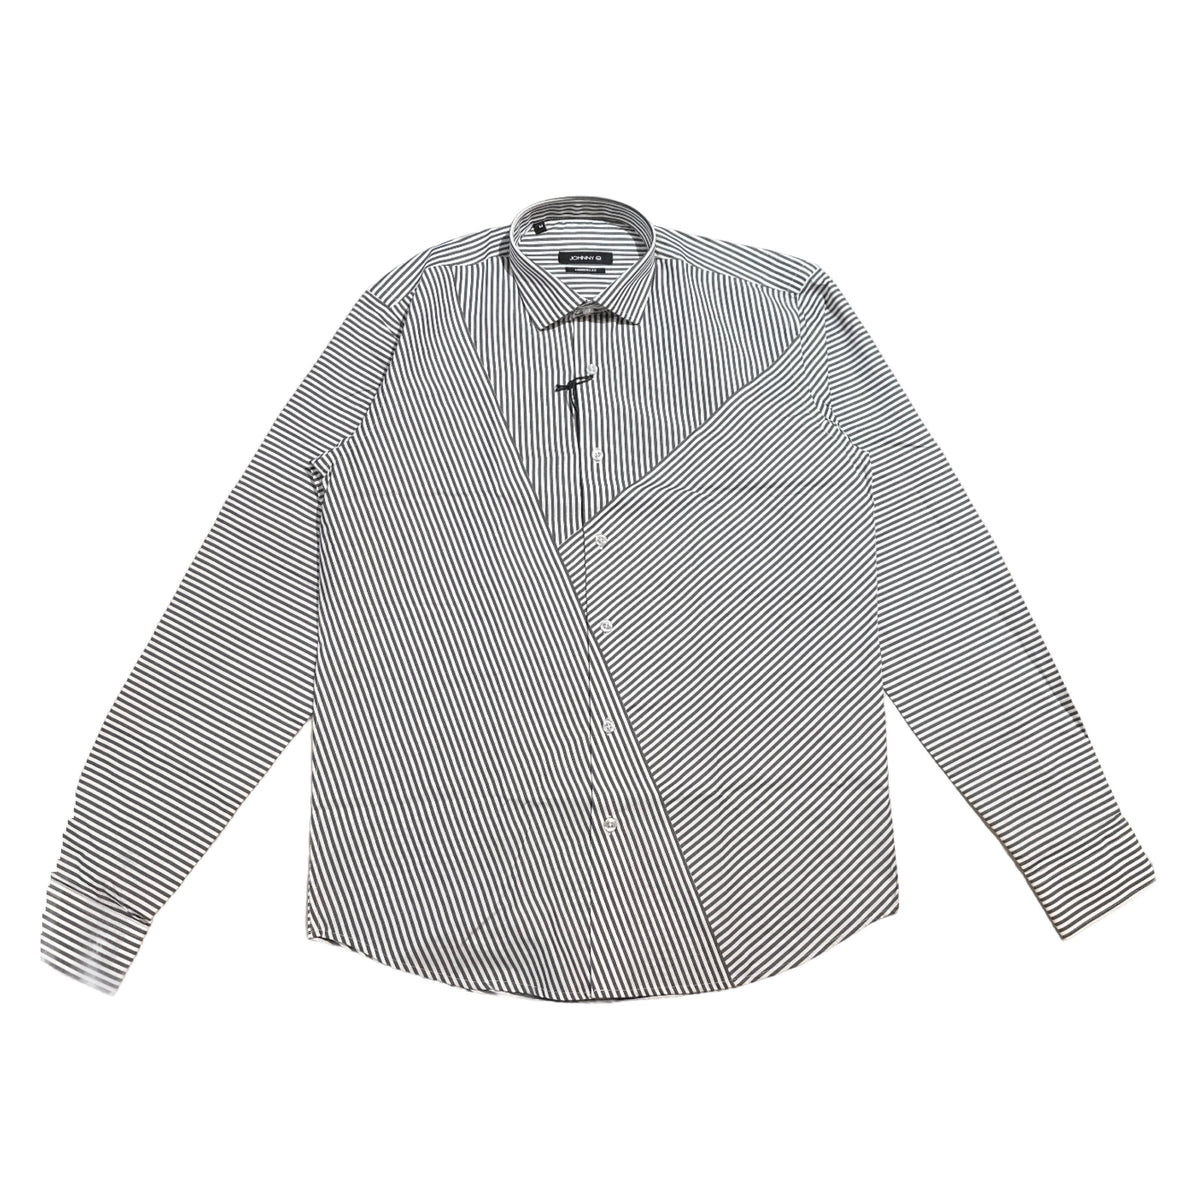 Johnny Q JQ 1008-D White/Black Button Up Shirt